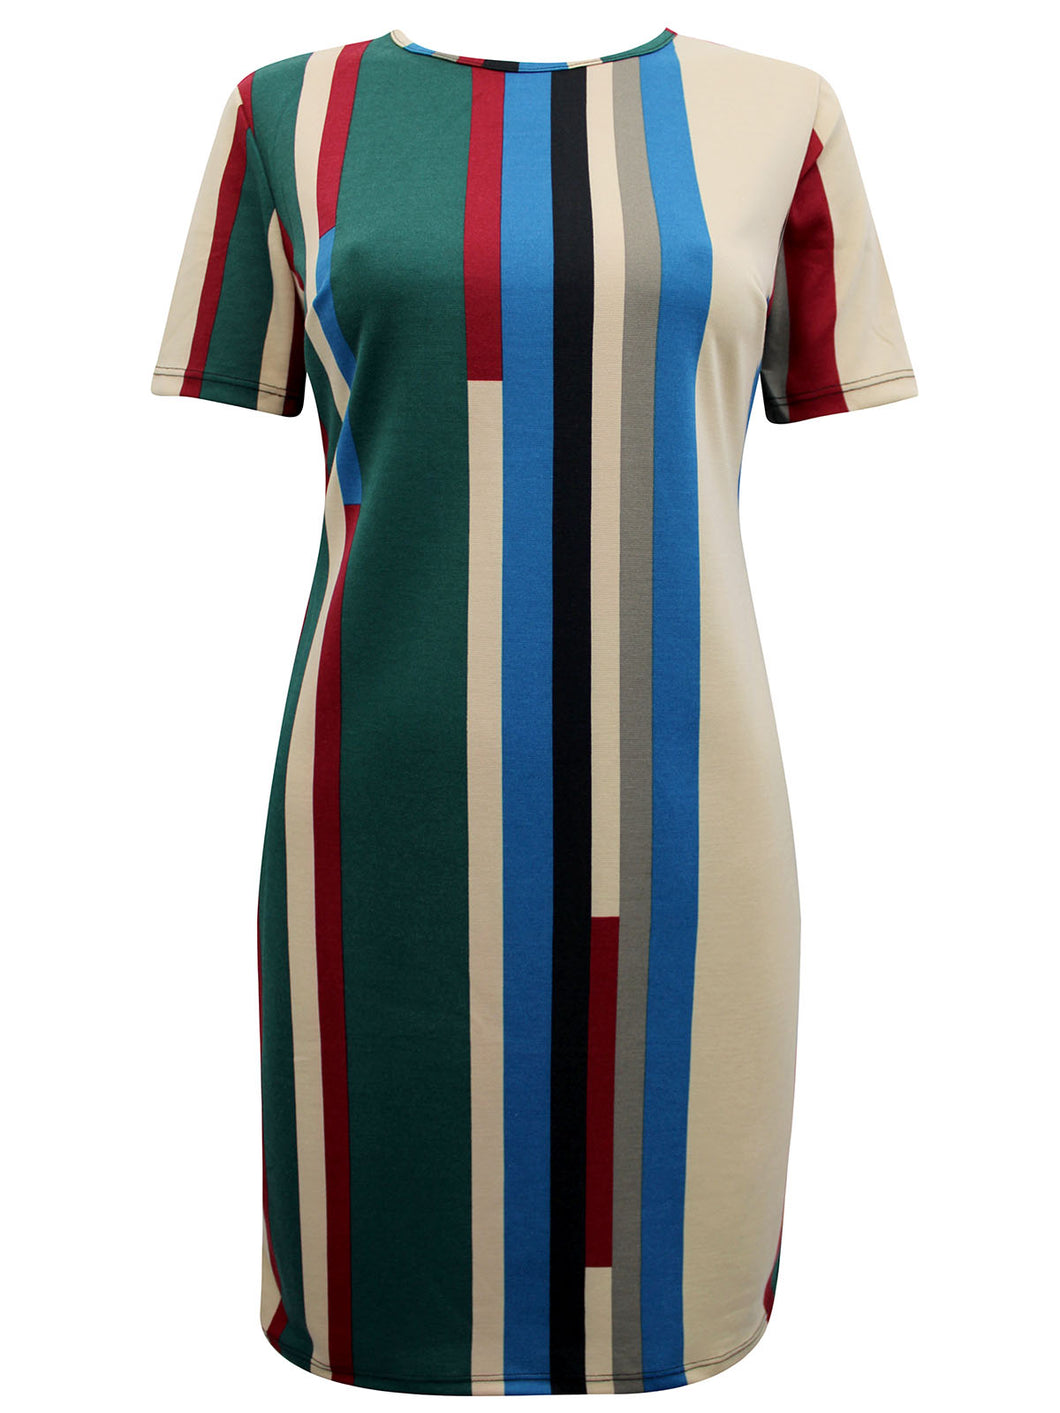 Curvy Multi Color Block Striped Tunic Short Sleeve Dress